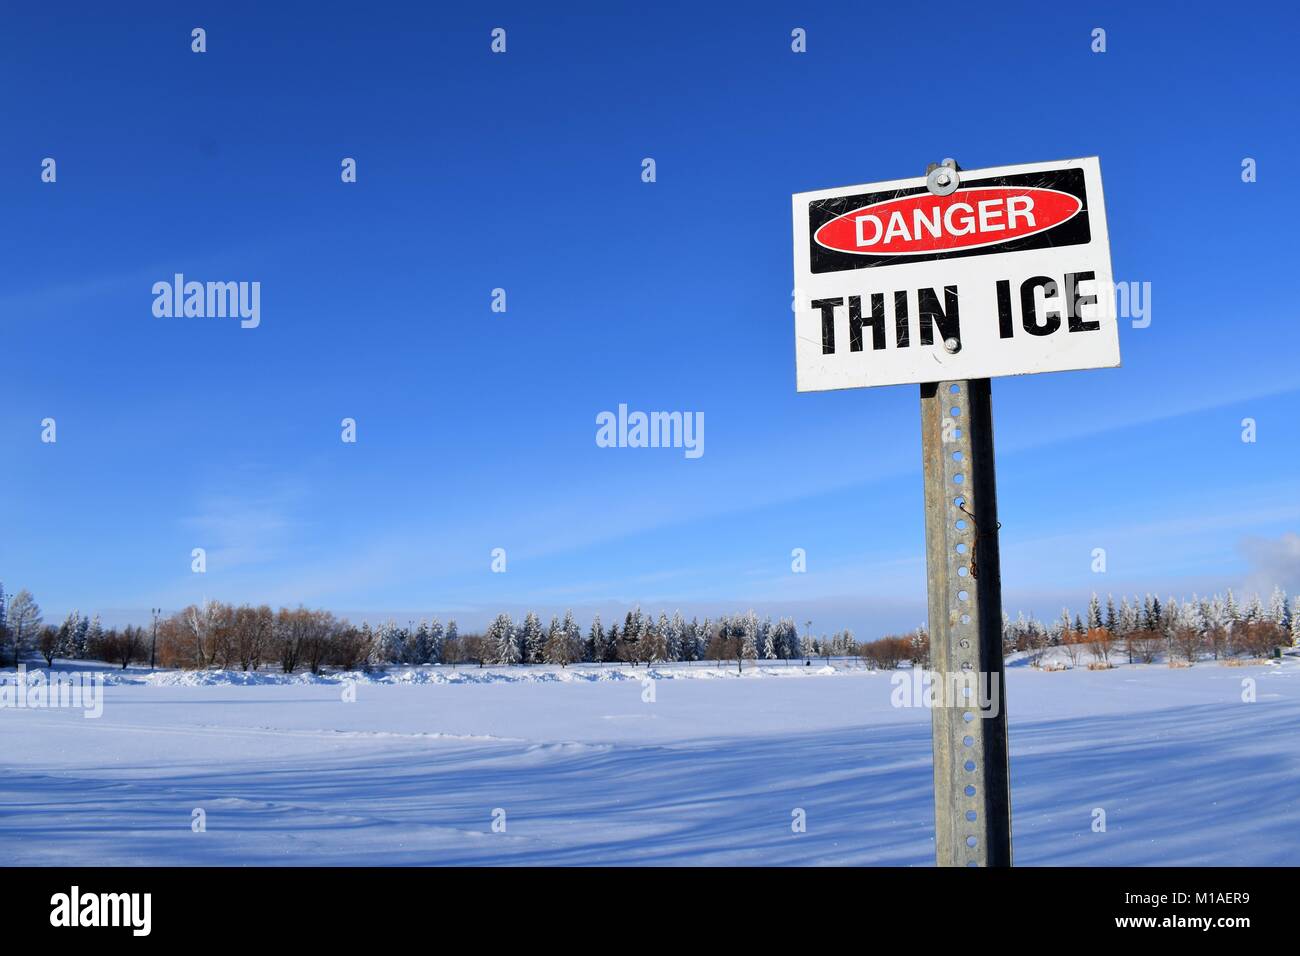 Thin ice sign at park Stock Photo